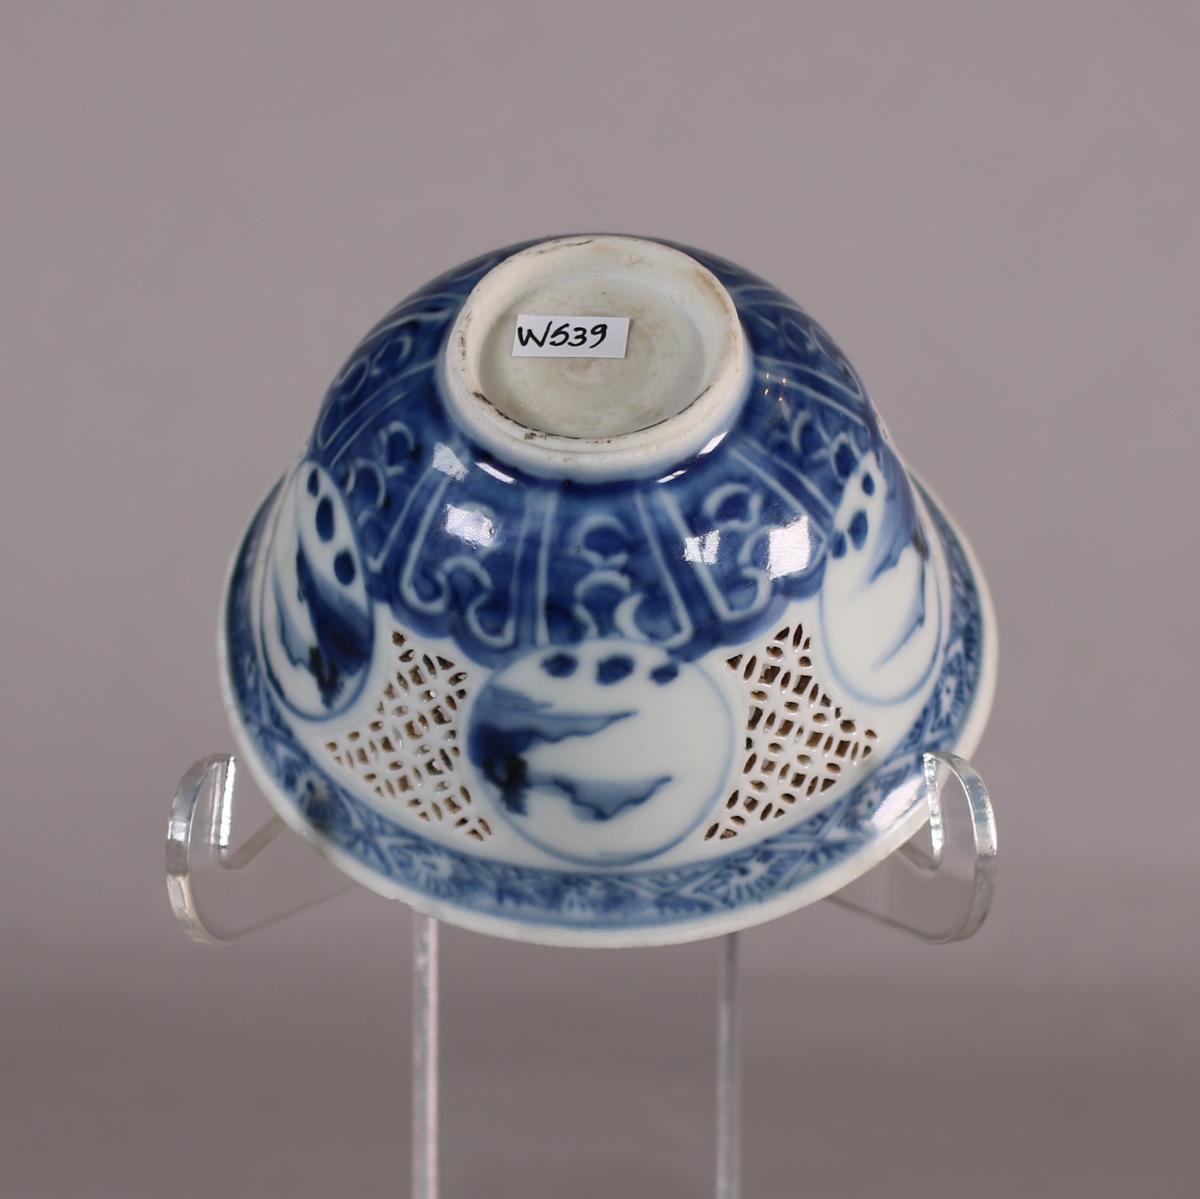 Base of Hatcher Cargo blue and white teabowl, c.1643